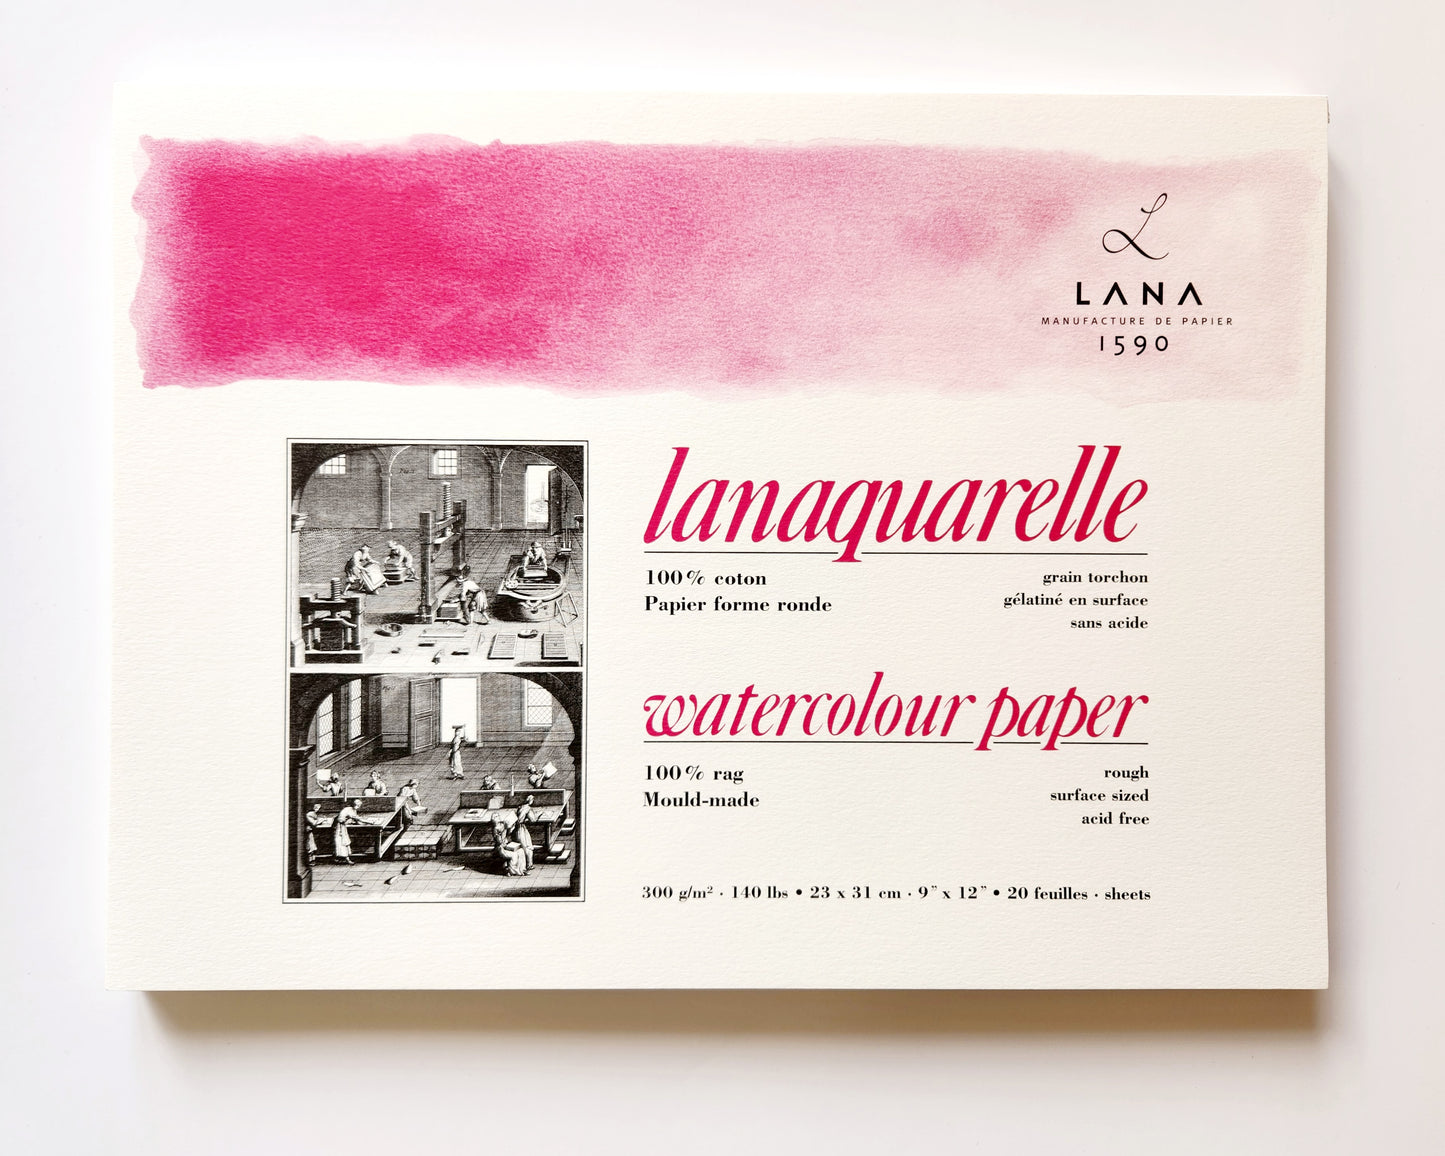 Lanaquarelle Aquarelle Pad 23 x 31 cm 300g Rough  Best quality cotton aquarelle paper. 100% cotton. Size 23 x 31 cm, 300g/m2, 20 sheets glued on all 4 sides. Rough paper with distinguishing surface structure. 